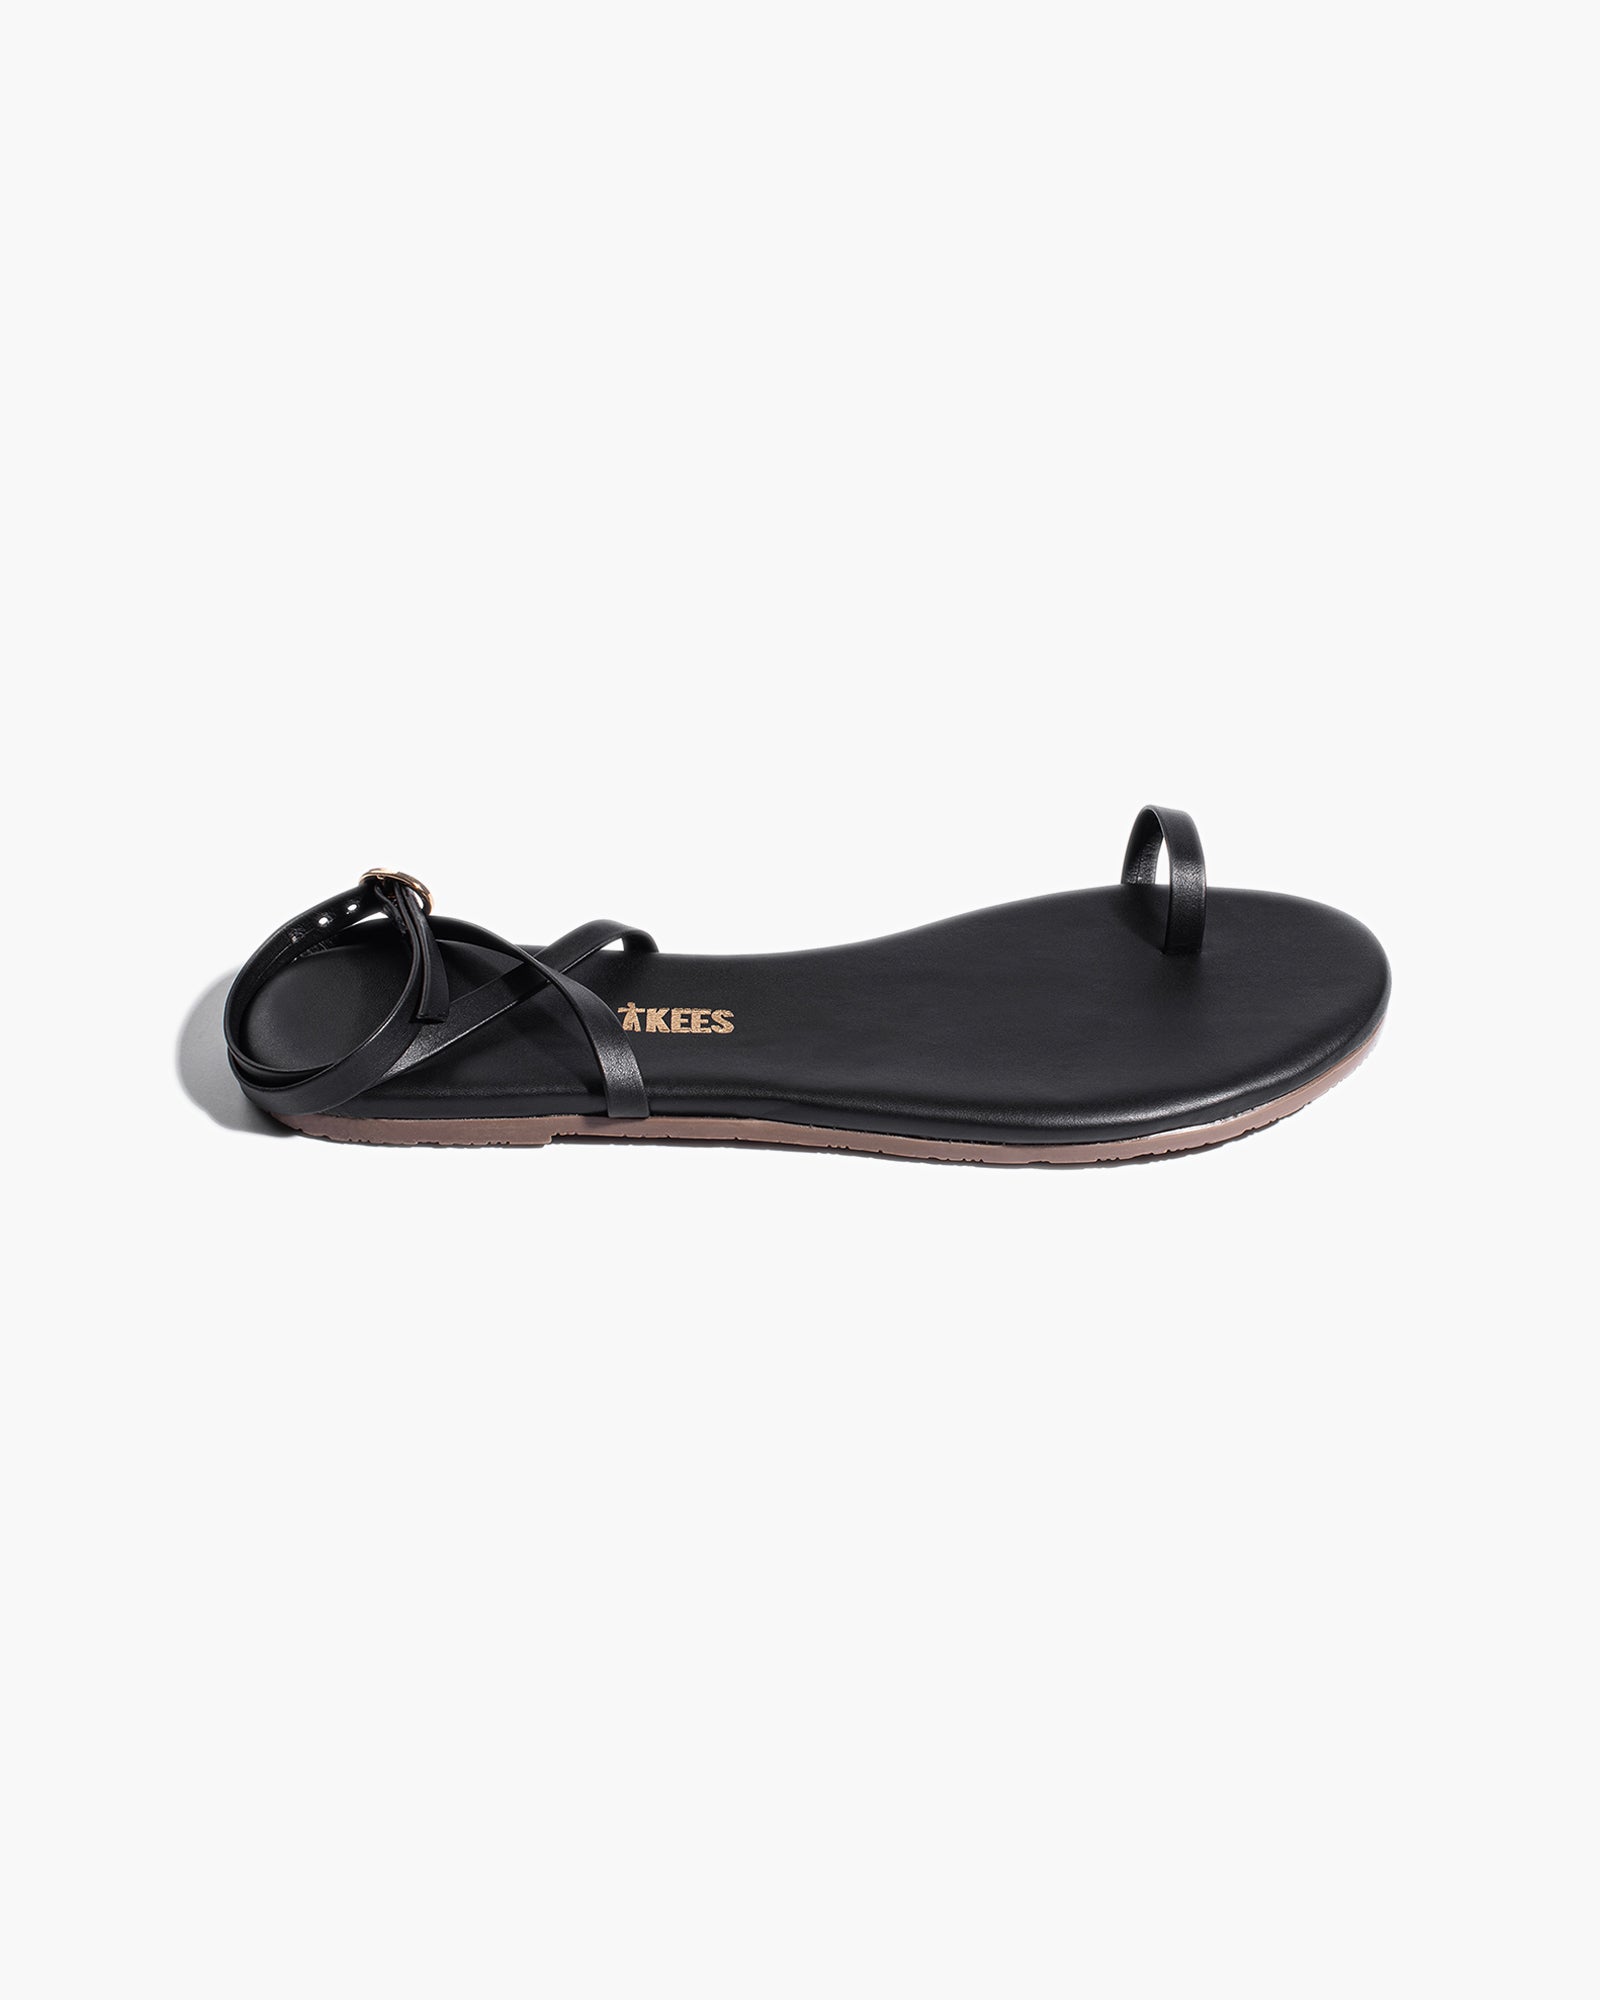 TKEES Phoebe Women's Sandals Black | ALQ681079